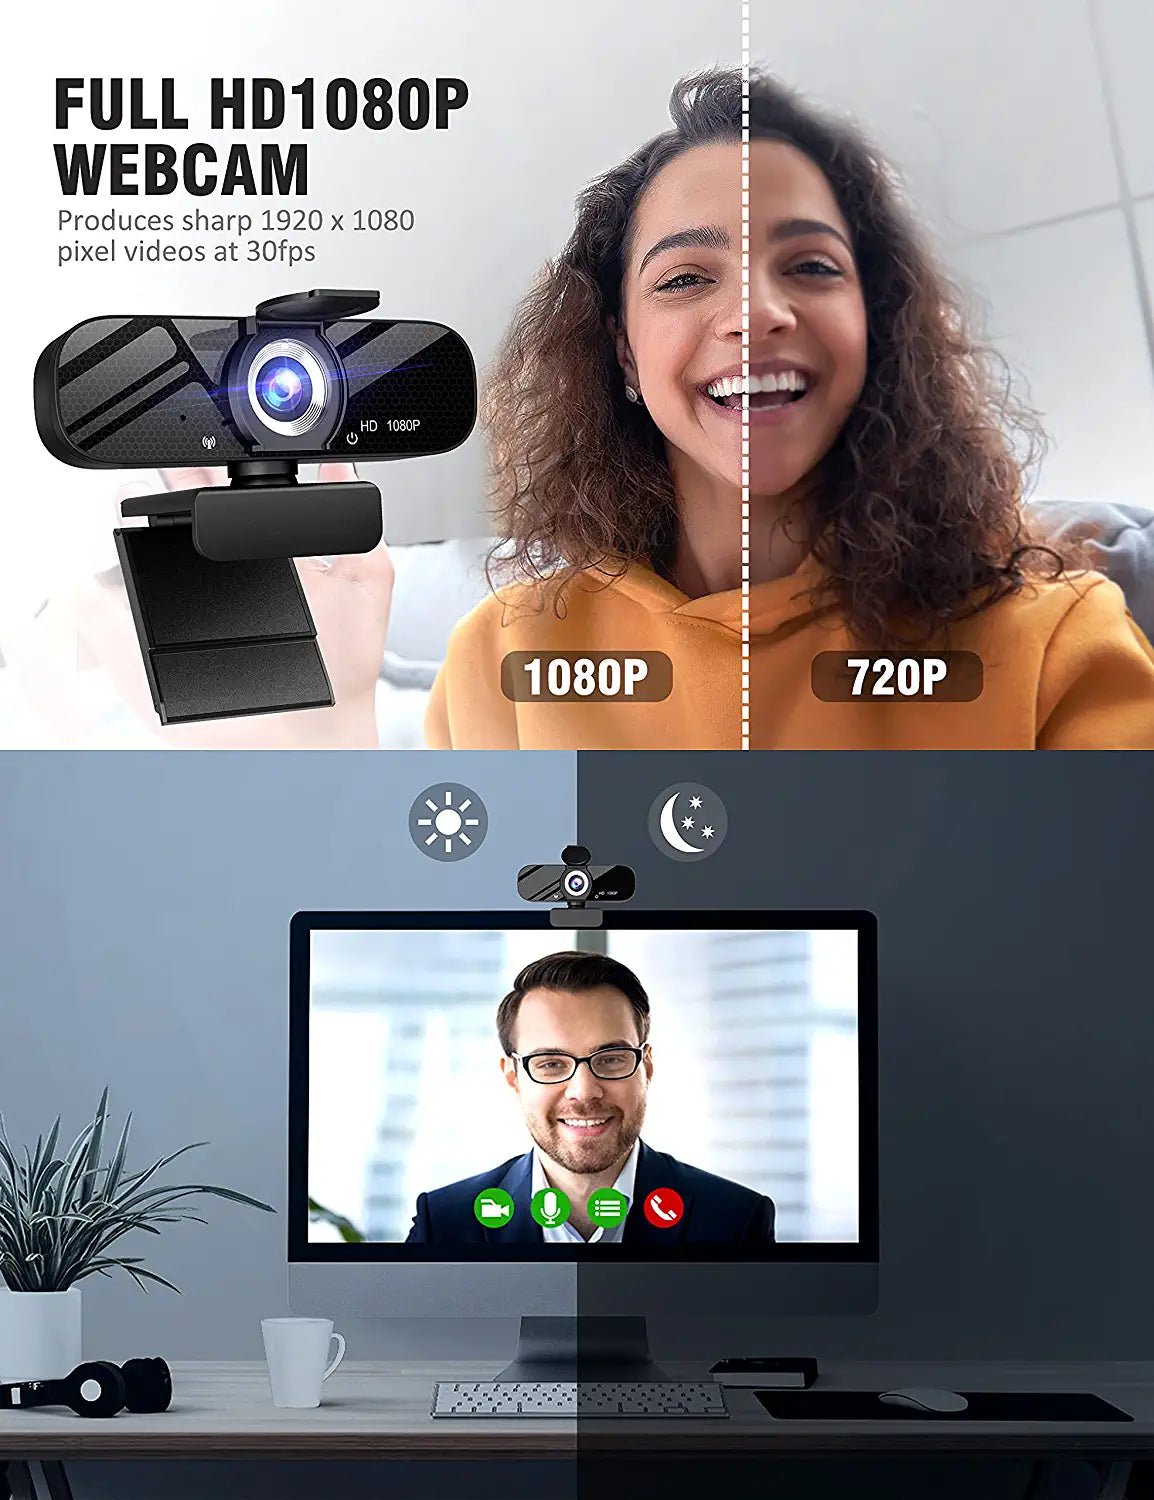 Web Camera Webcam 1080p,wide Angle Full Hd 1080p 60fps Computer